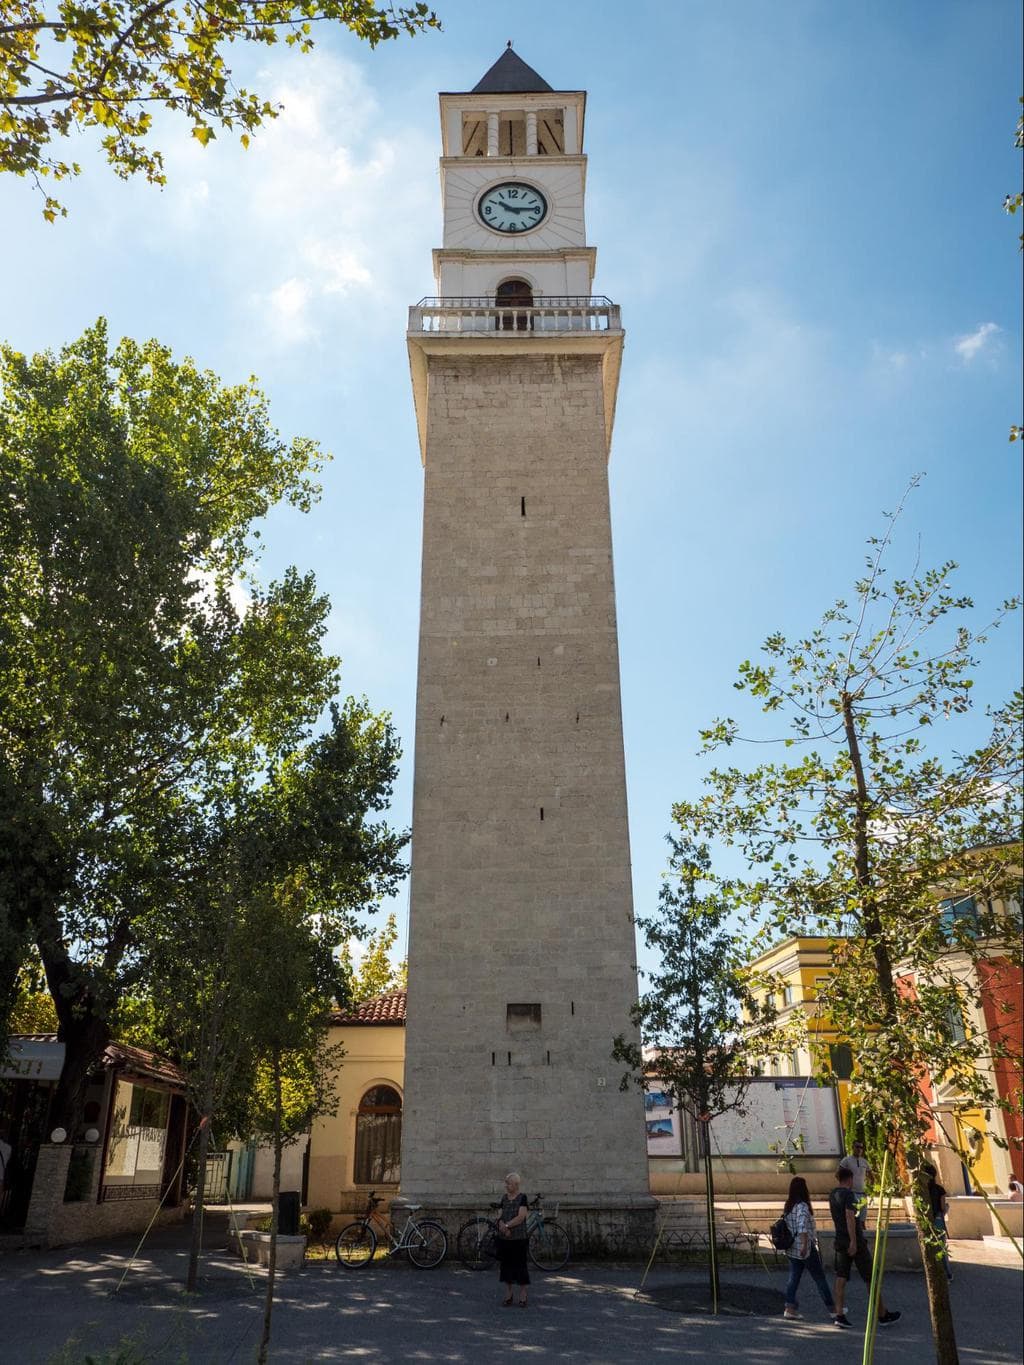 Tirana’s Clock Tower